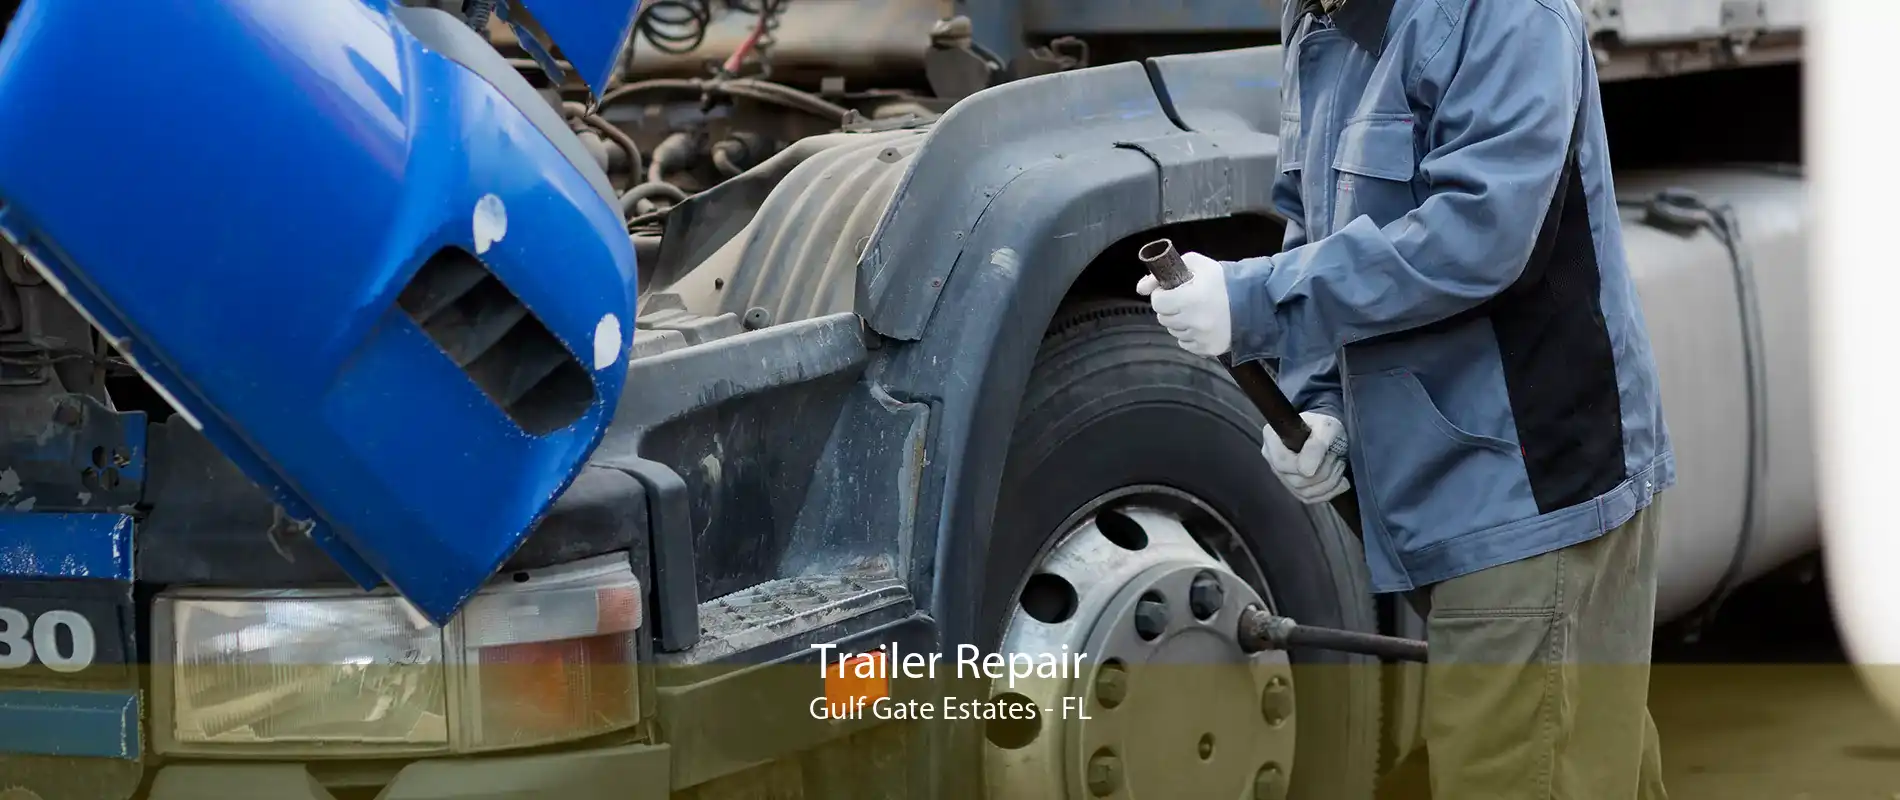 Trailer Repair Gulf Gate Estates - FL